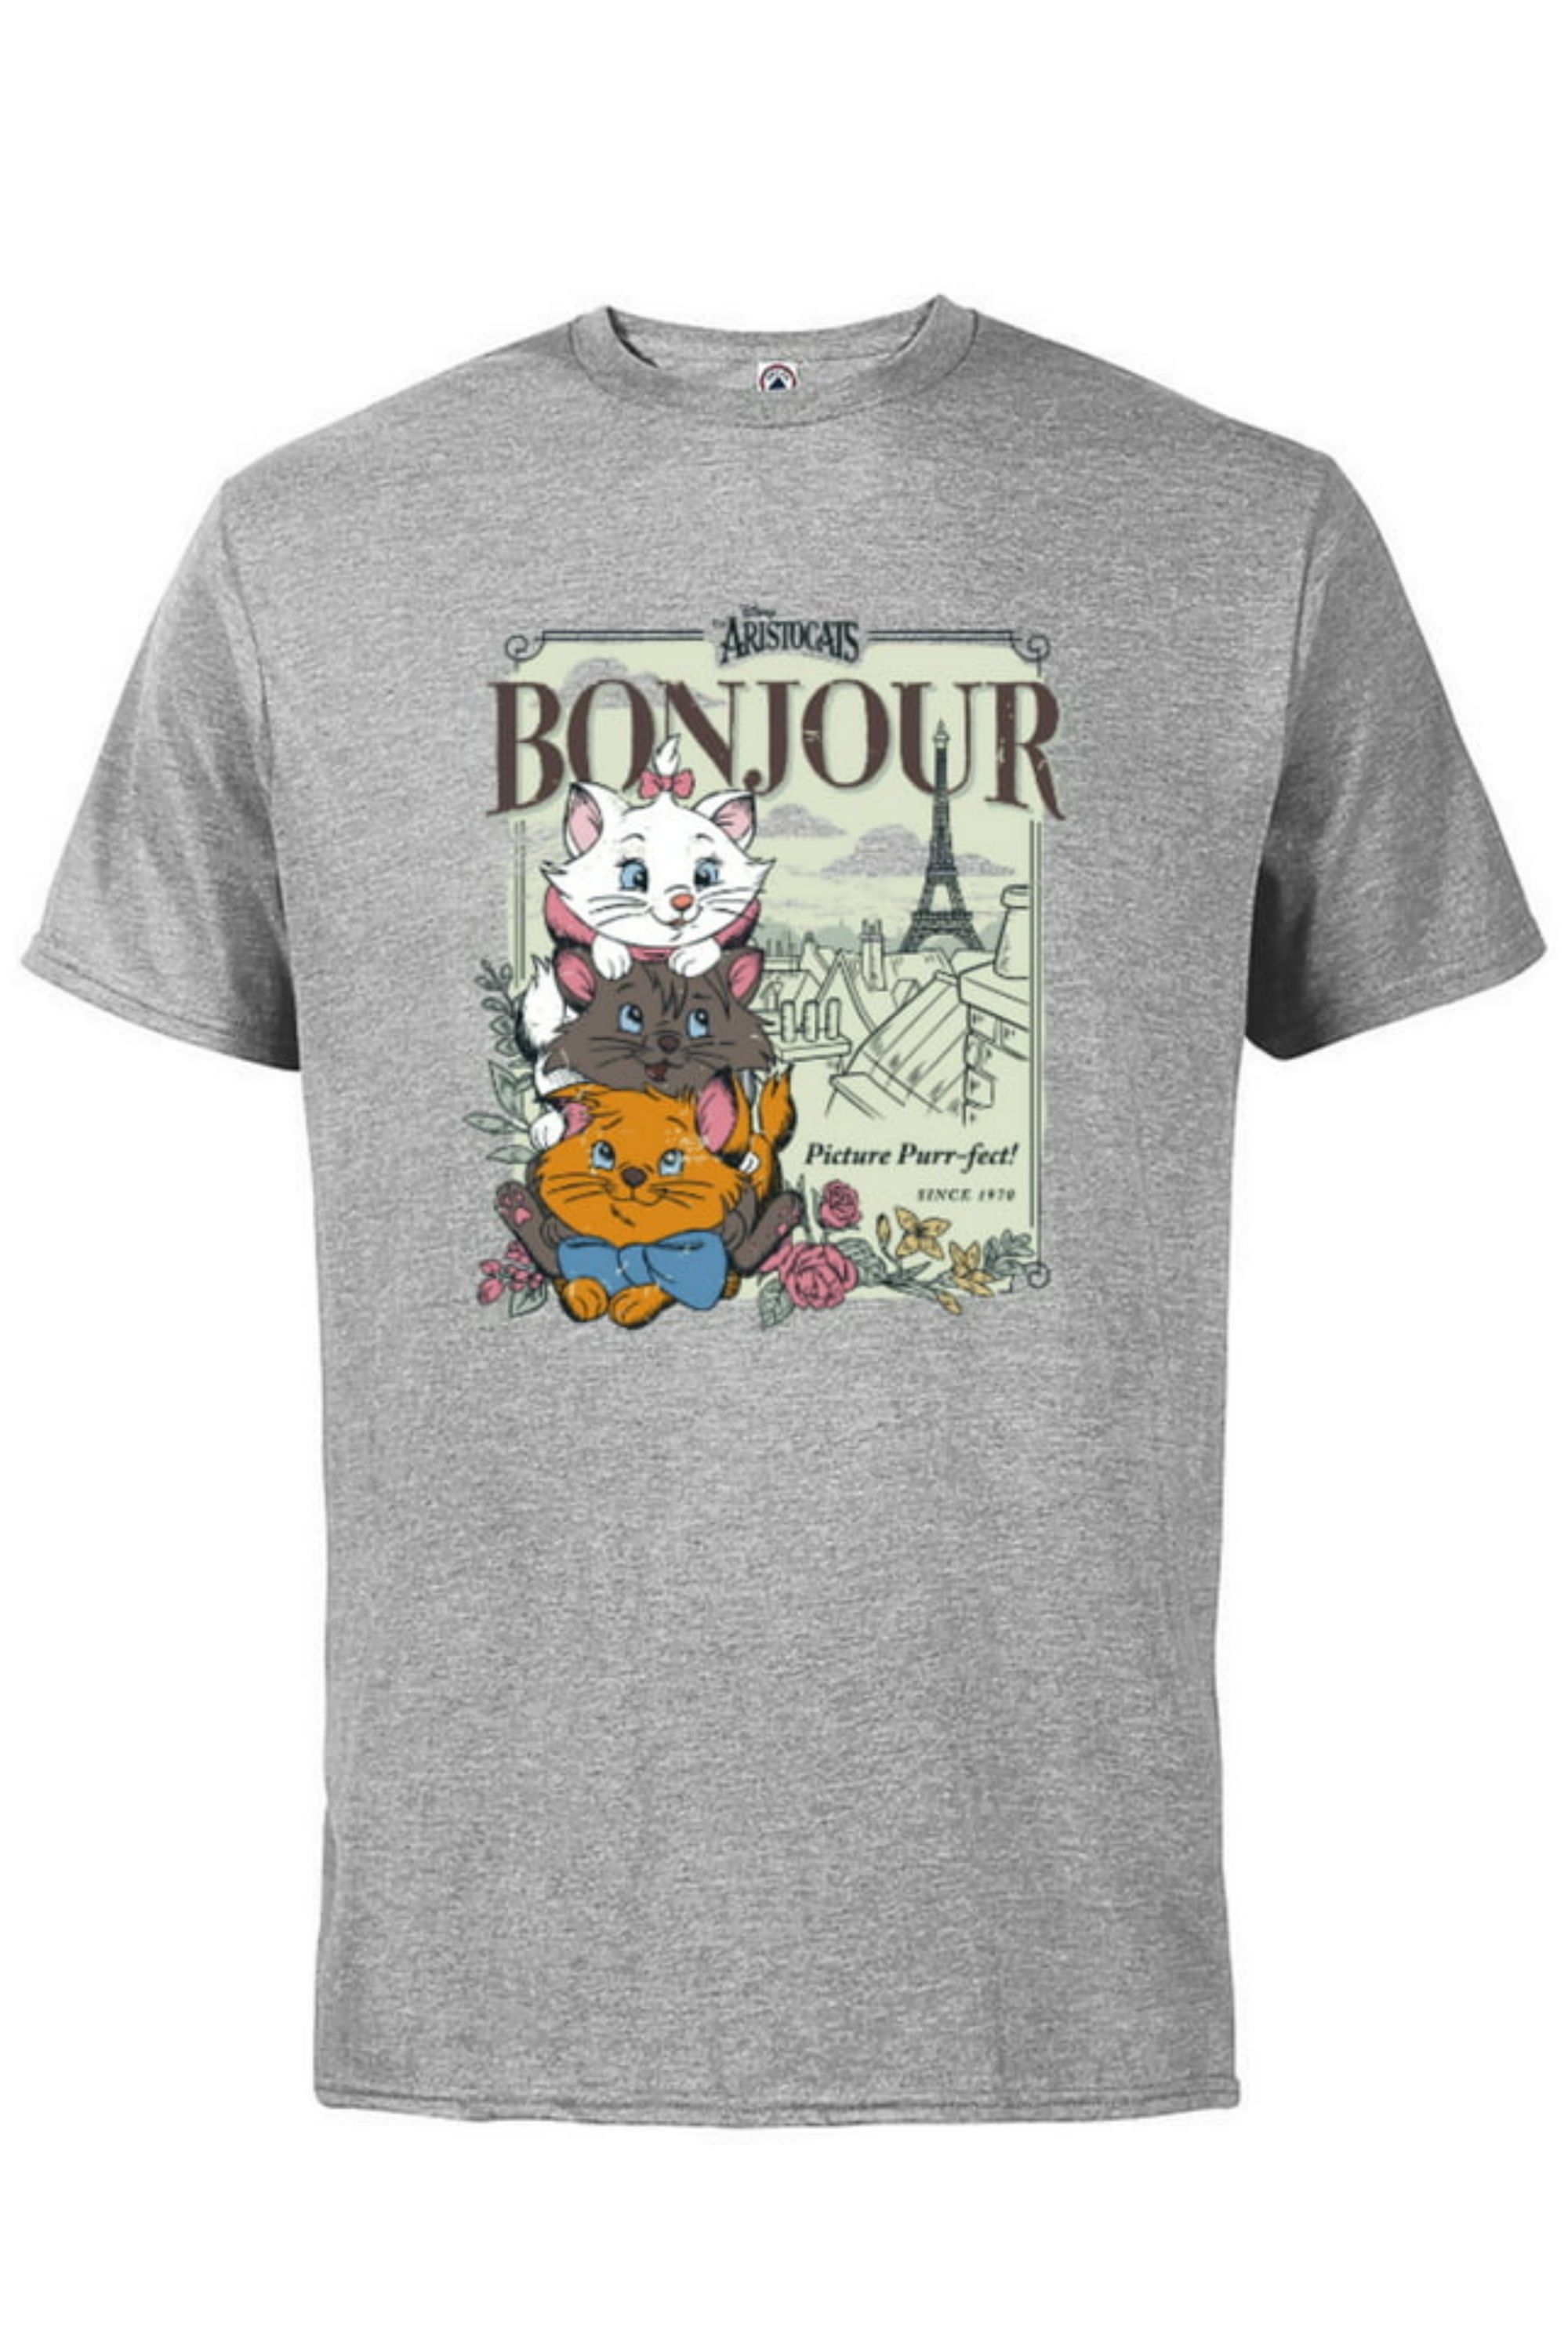 Bonjour The Aristocats T-Shirt